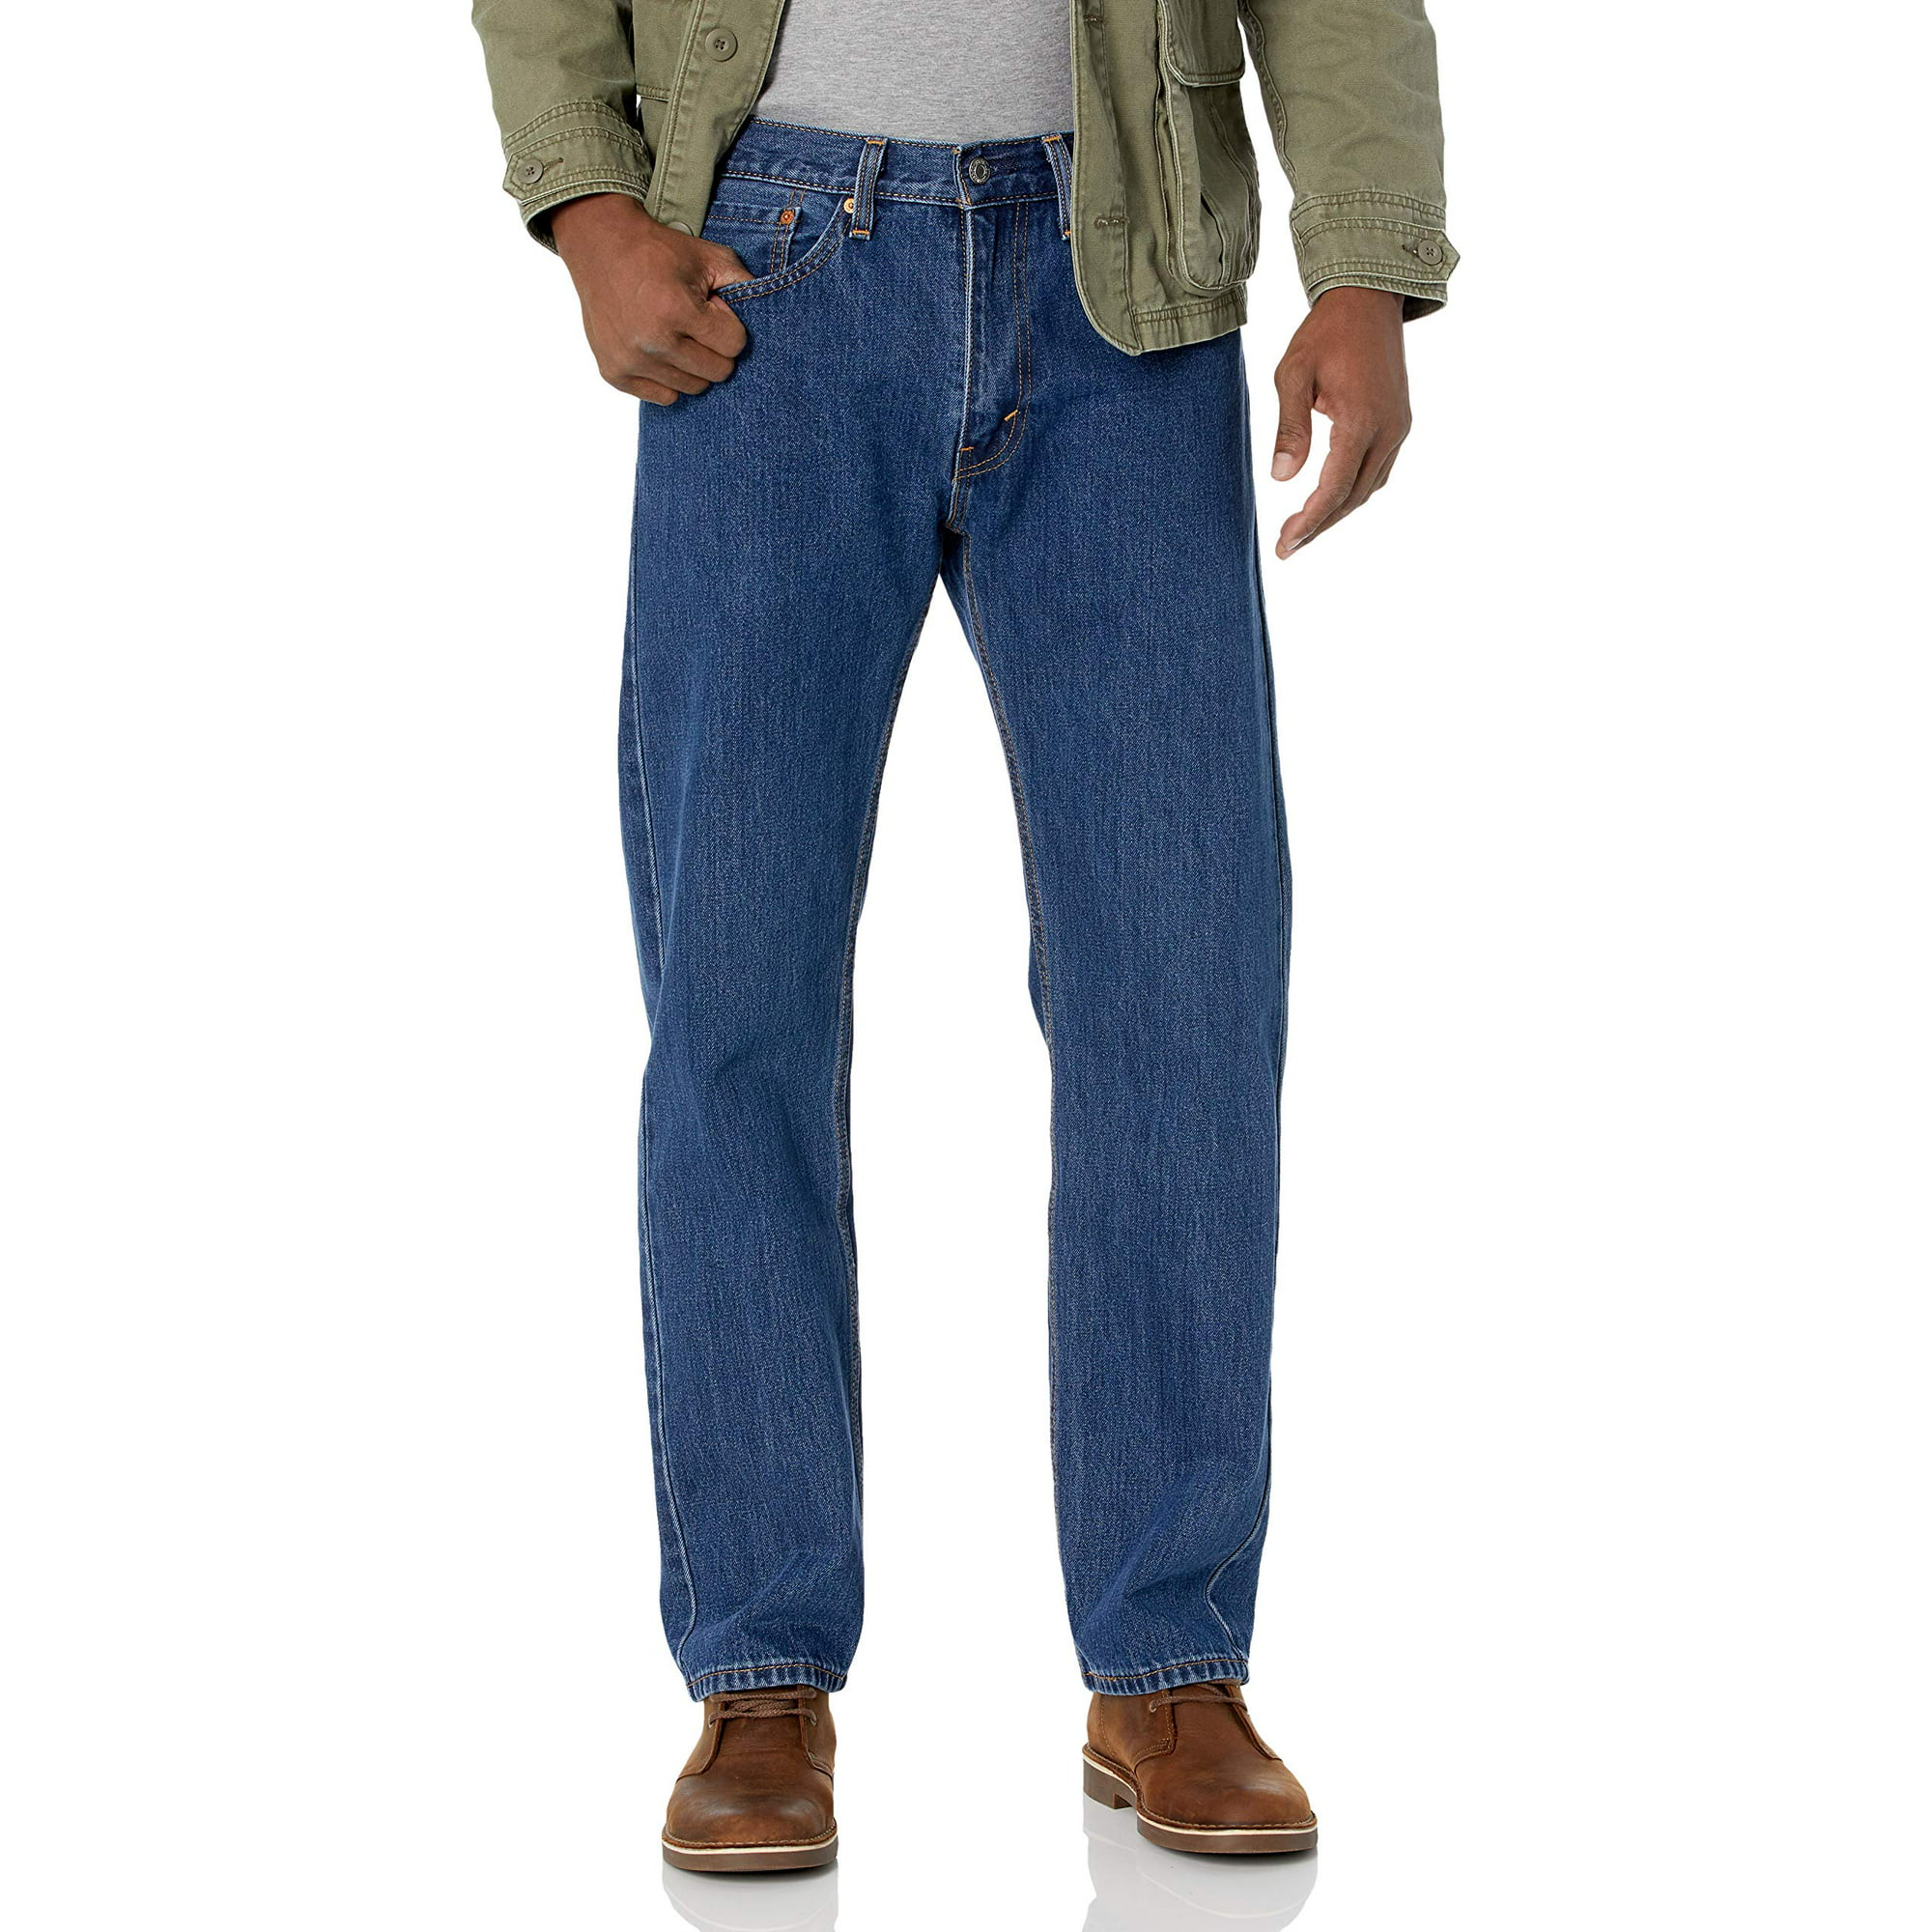 Levi's Men's 505 Regular Fit Jean, Dark Stonewash, 32x30 | Walmart Canada